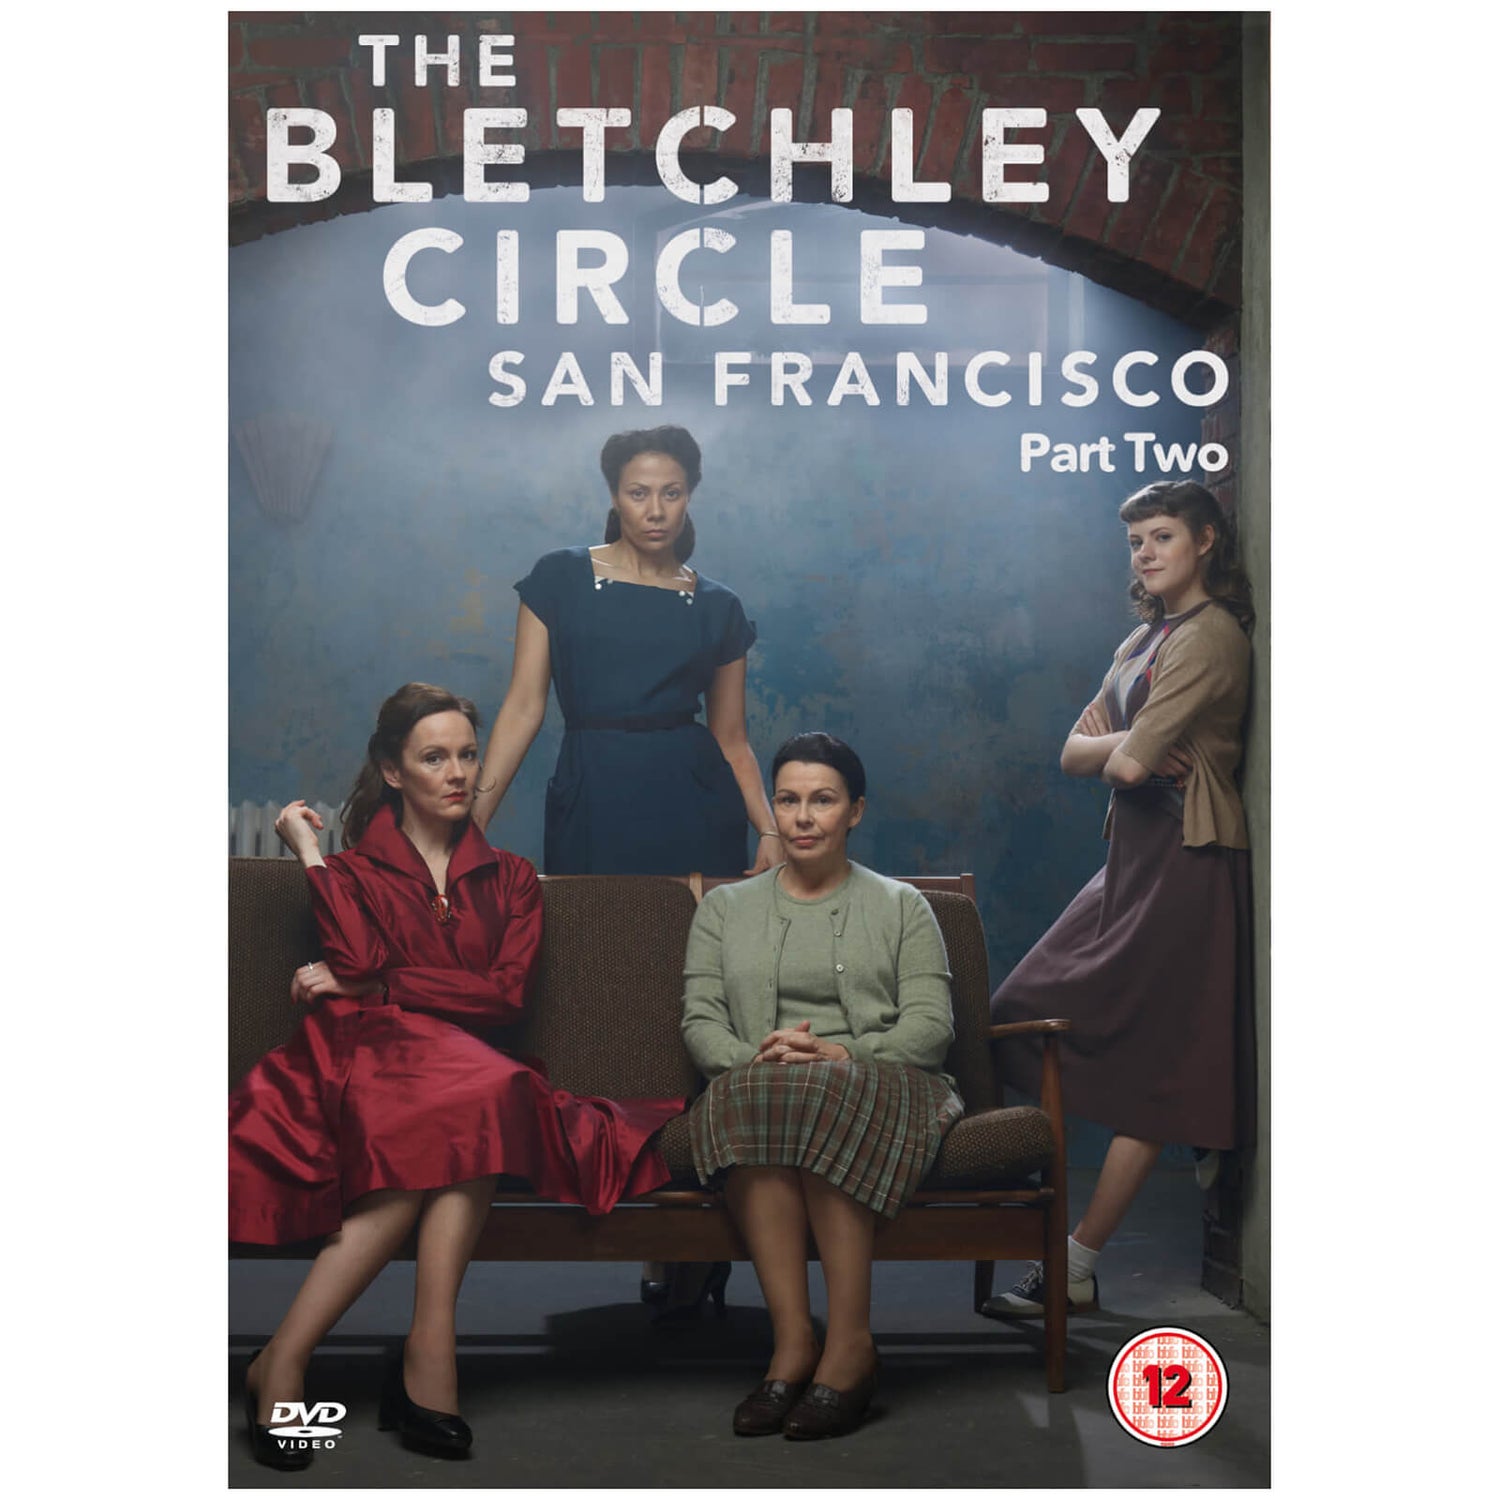 The Bletchley Circle San Francisco Part 2